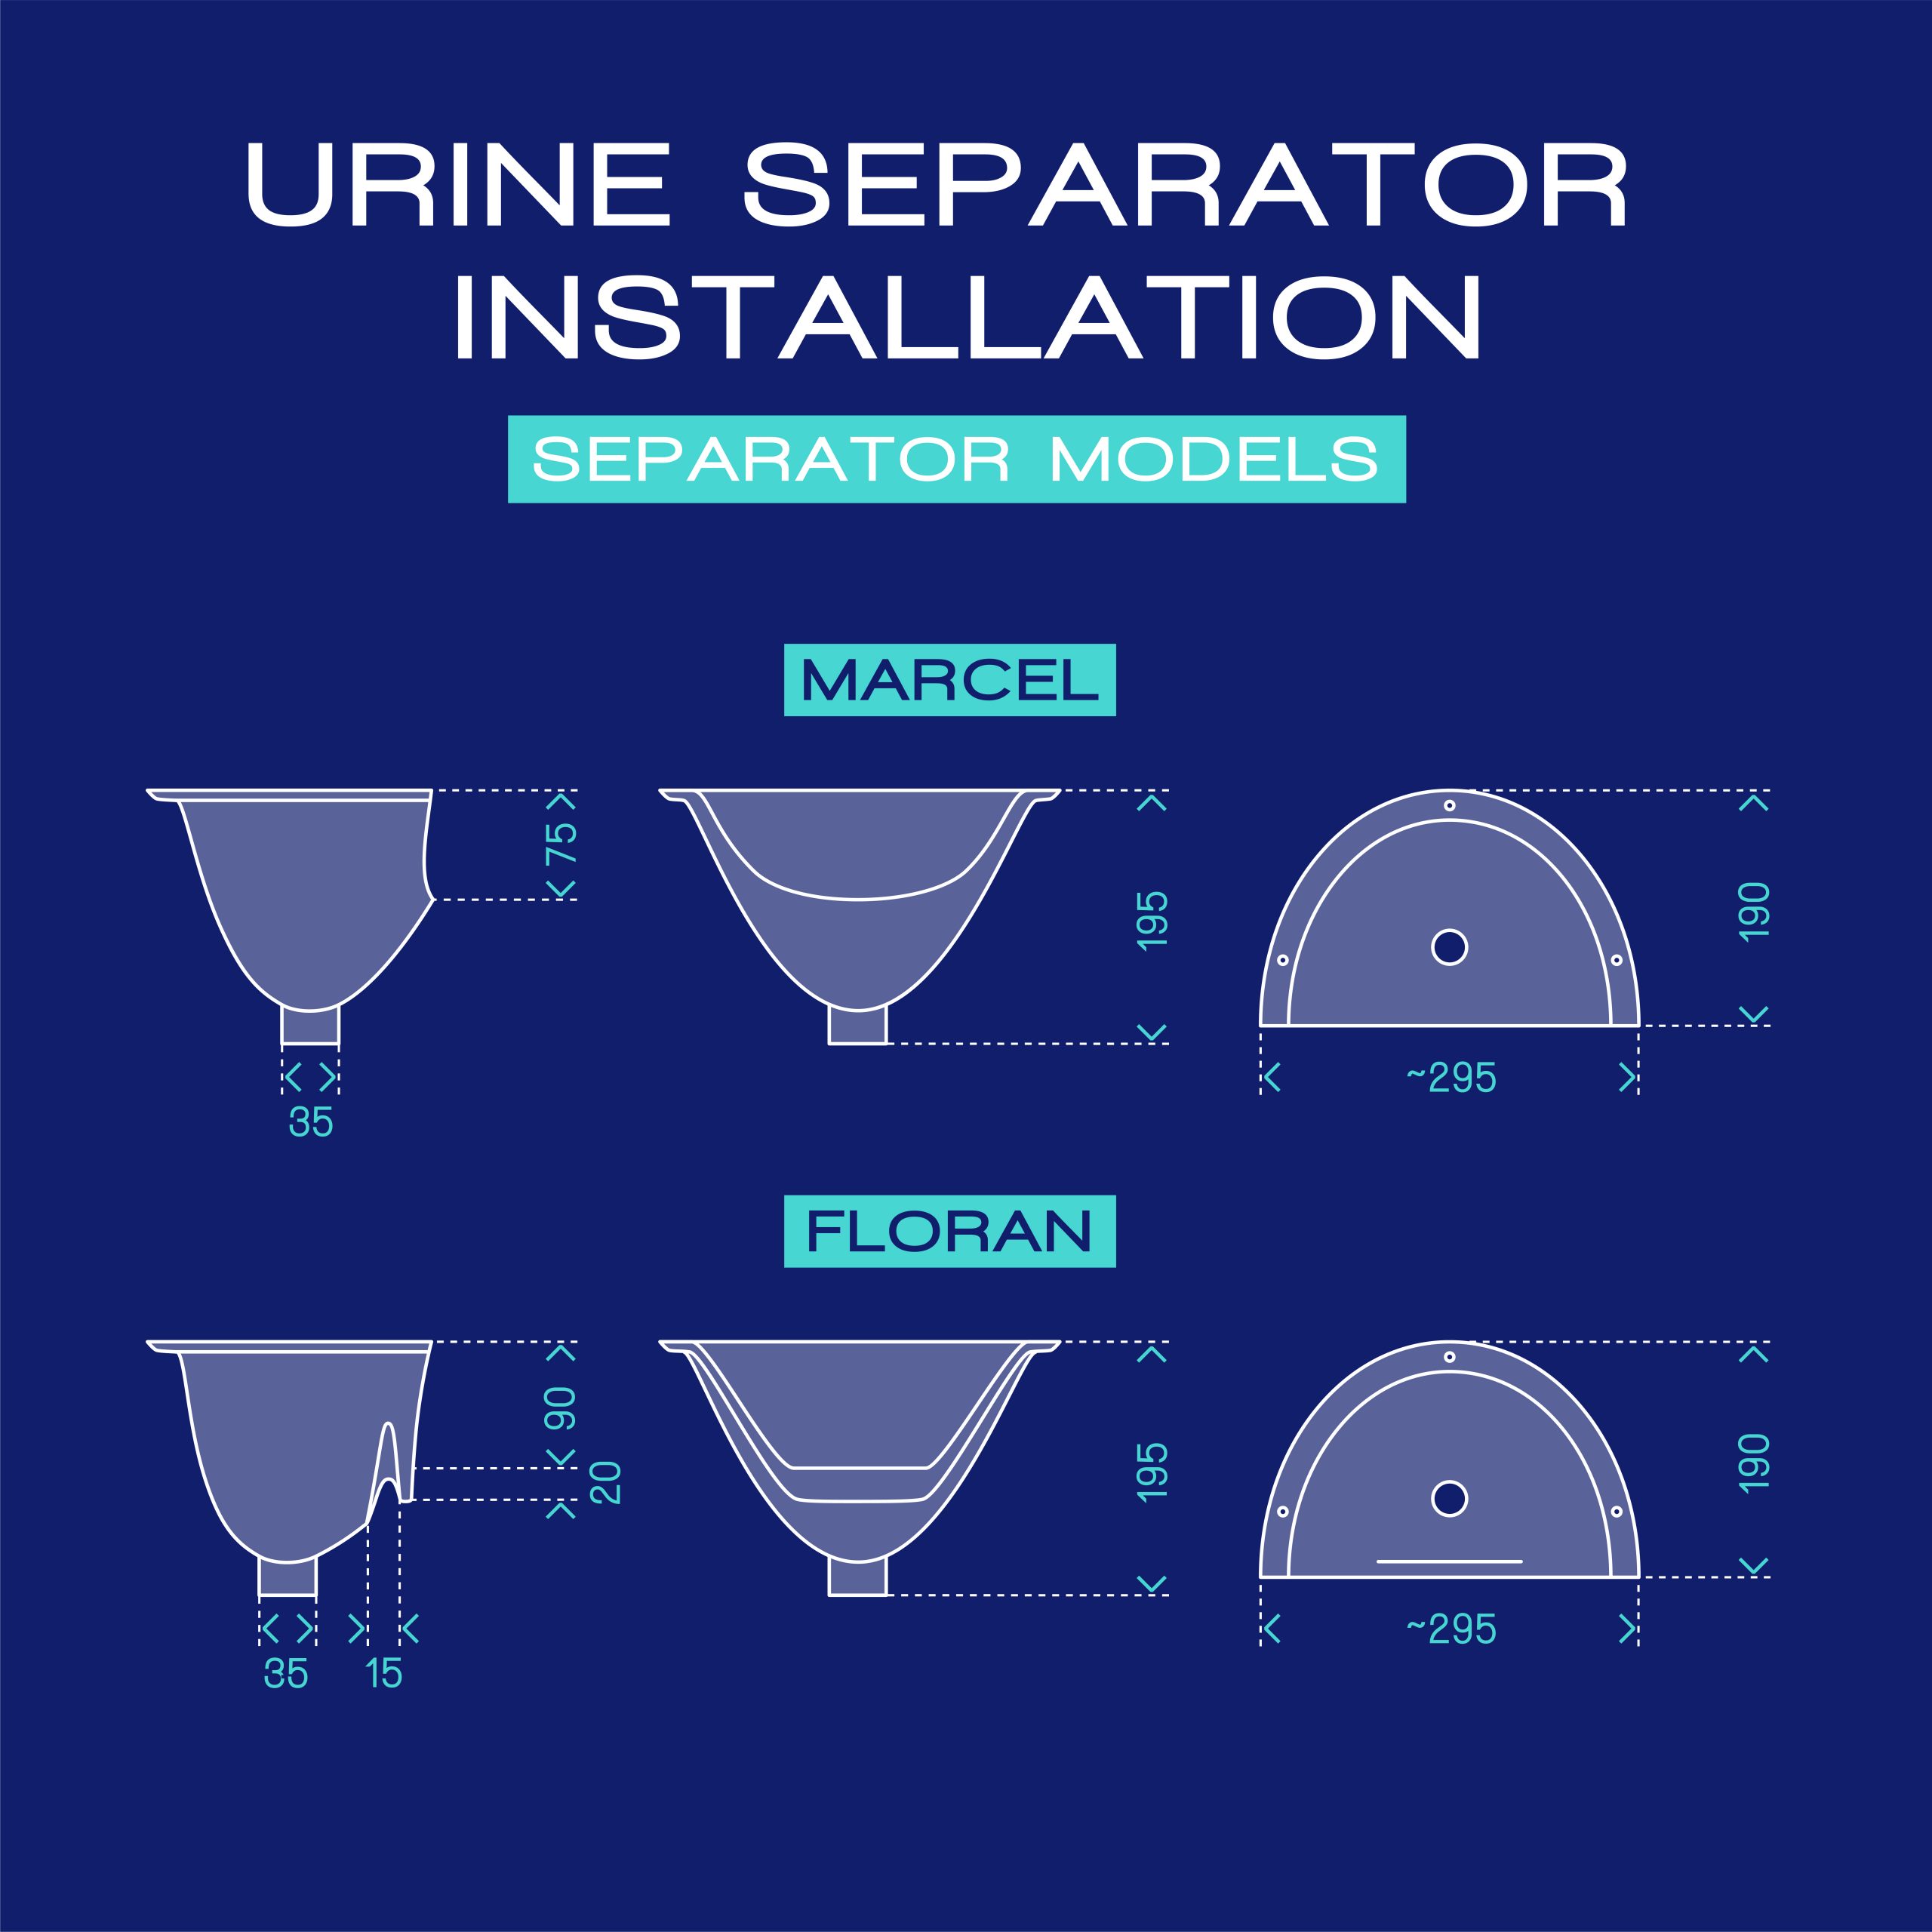 Urine Separator Installation - Separator models dimensions